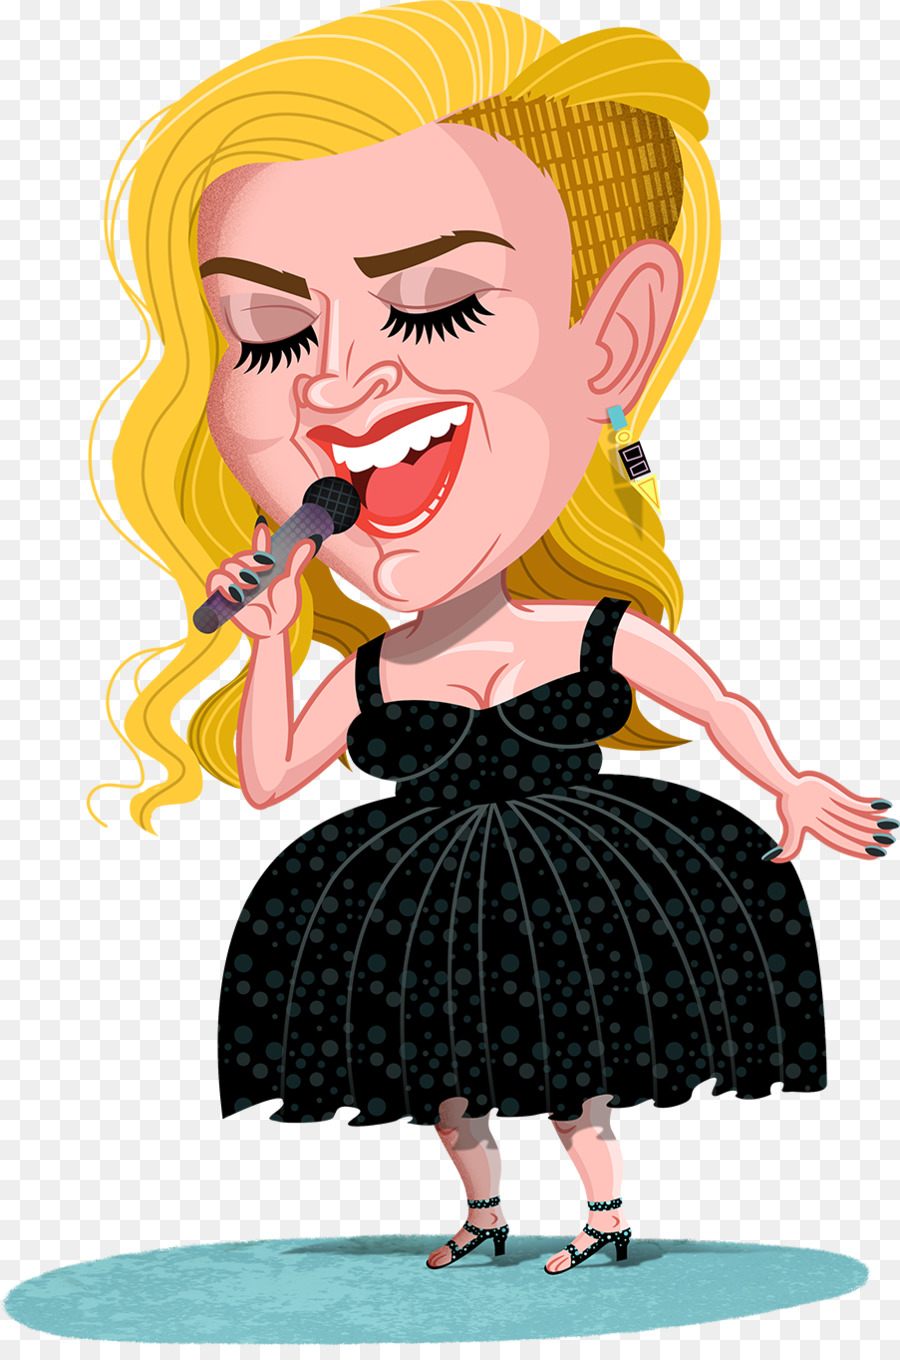 Cartoon - kelly clarkson - Kelly Clarkson Clipart